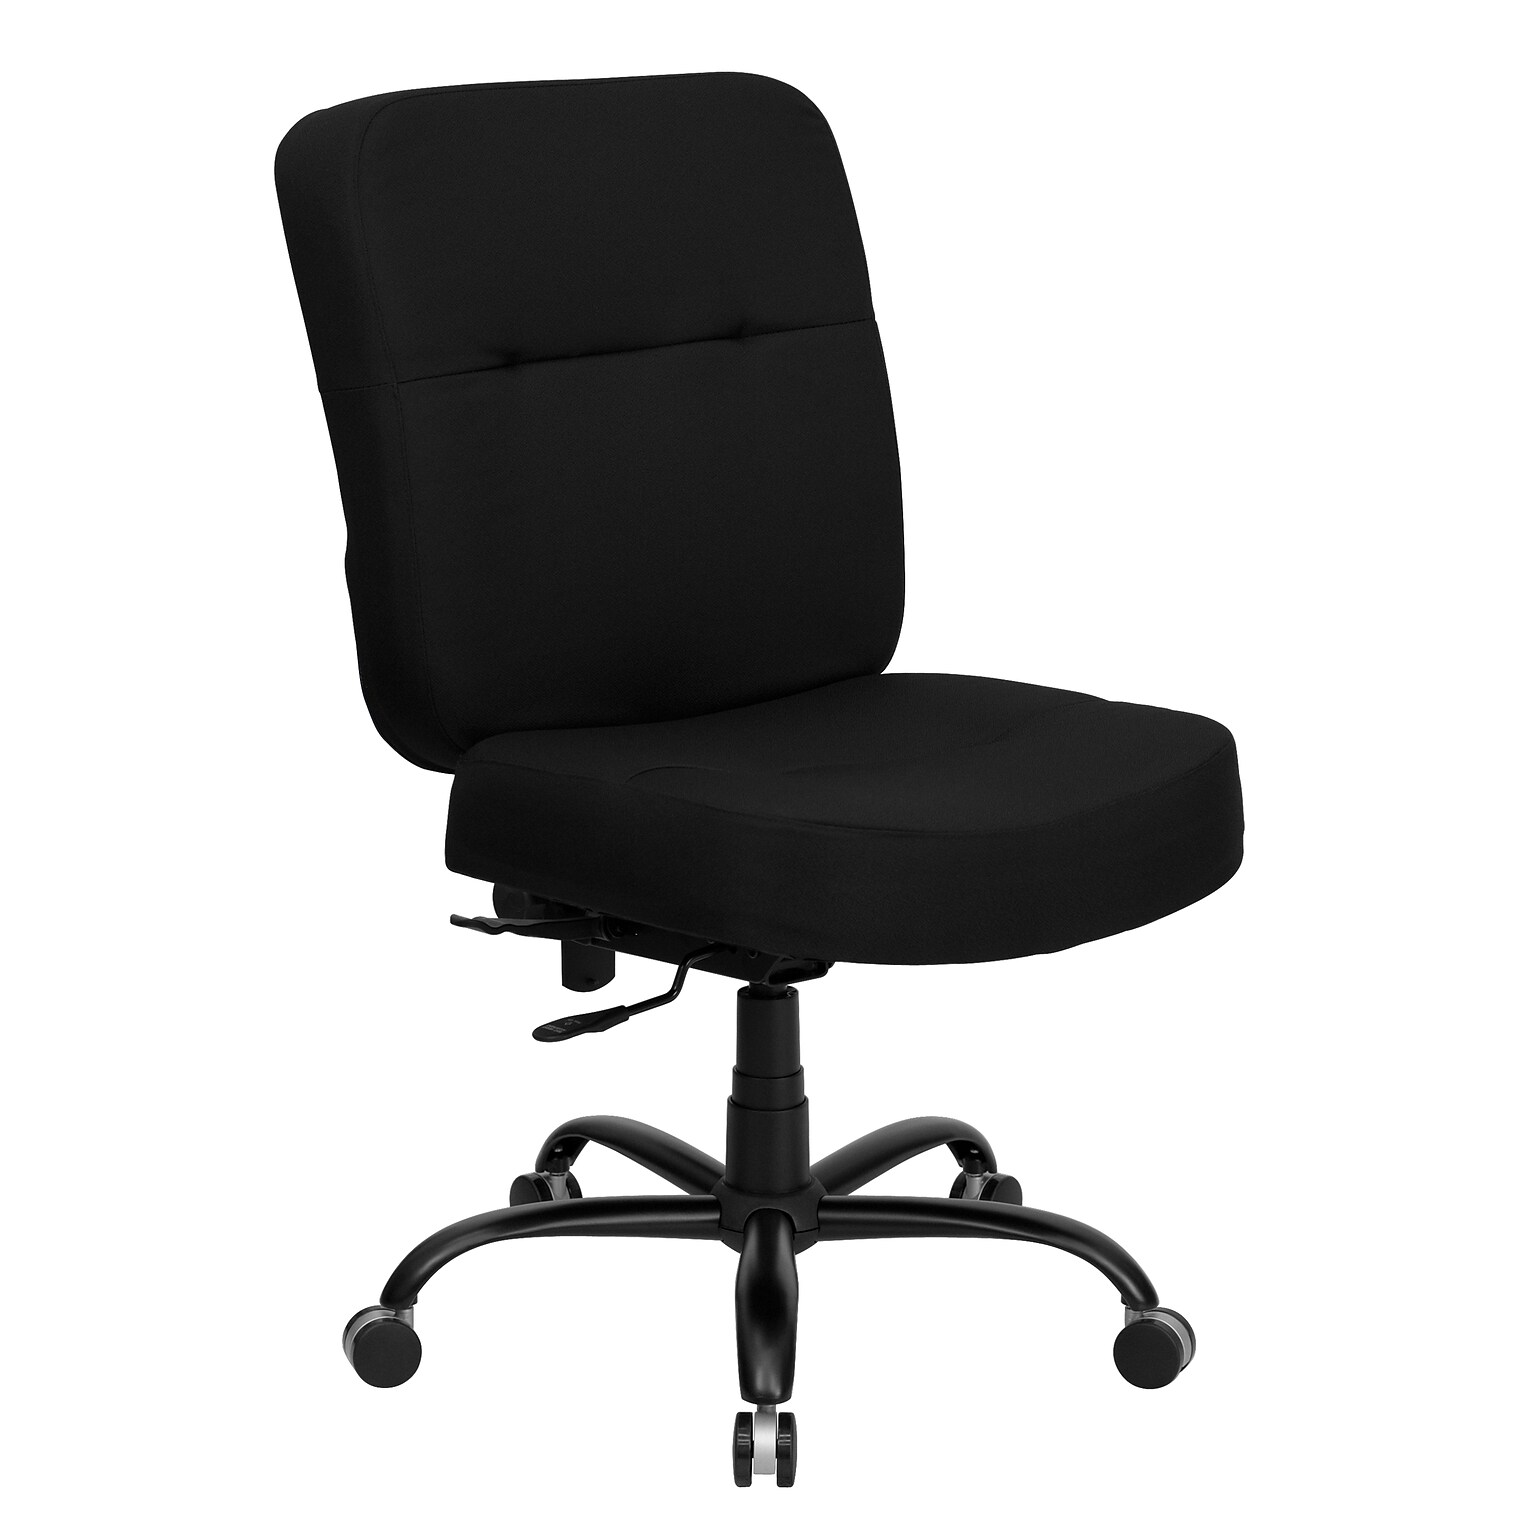 Flash Furniture HERCULES Series Fabric Office Big & Tall Chair, Black (WL735SYGBK)